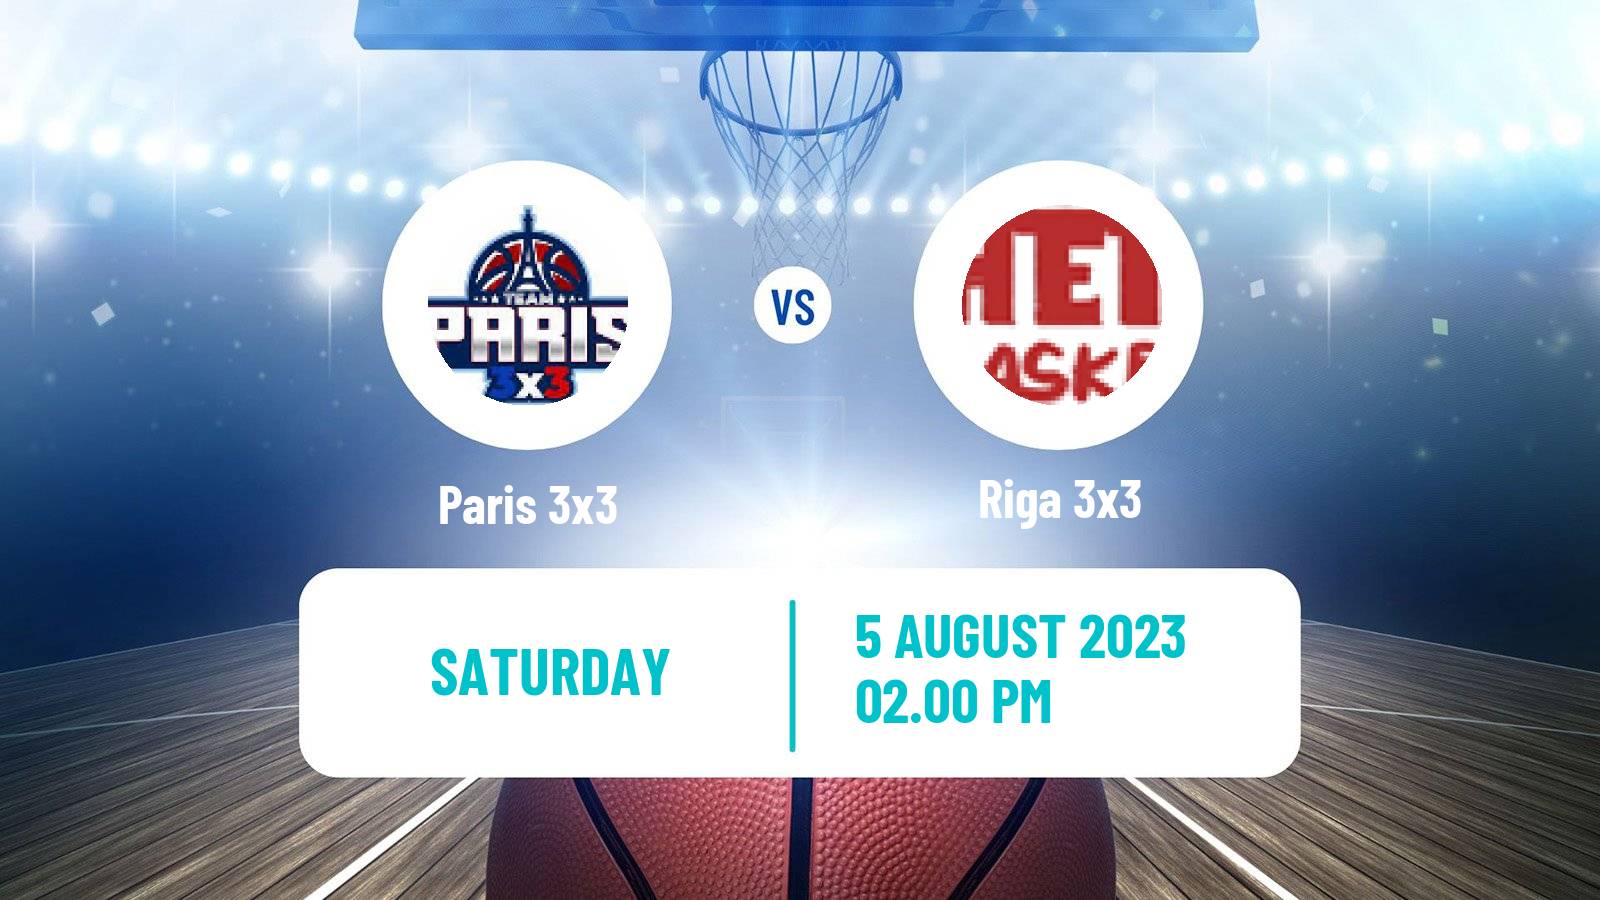 Basketball World Tour Prague 3x3 Paris 3x3 - Riga 3x3